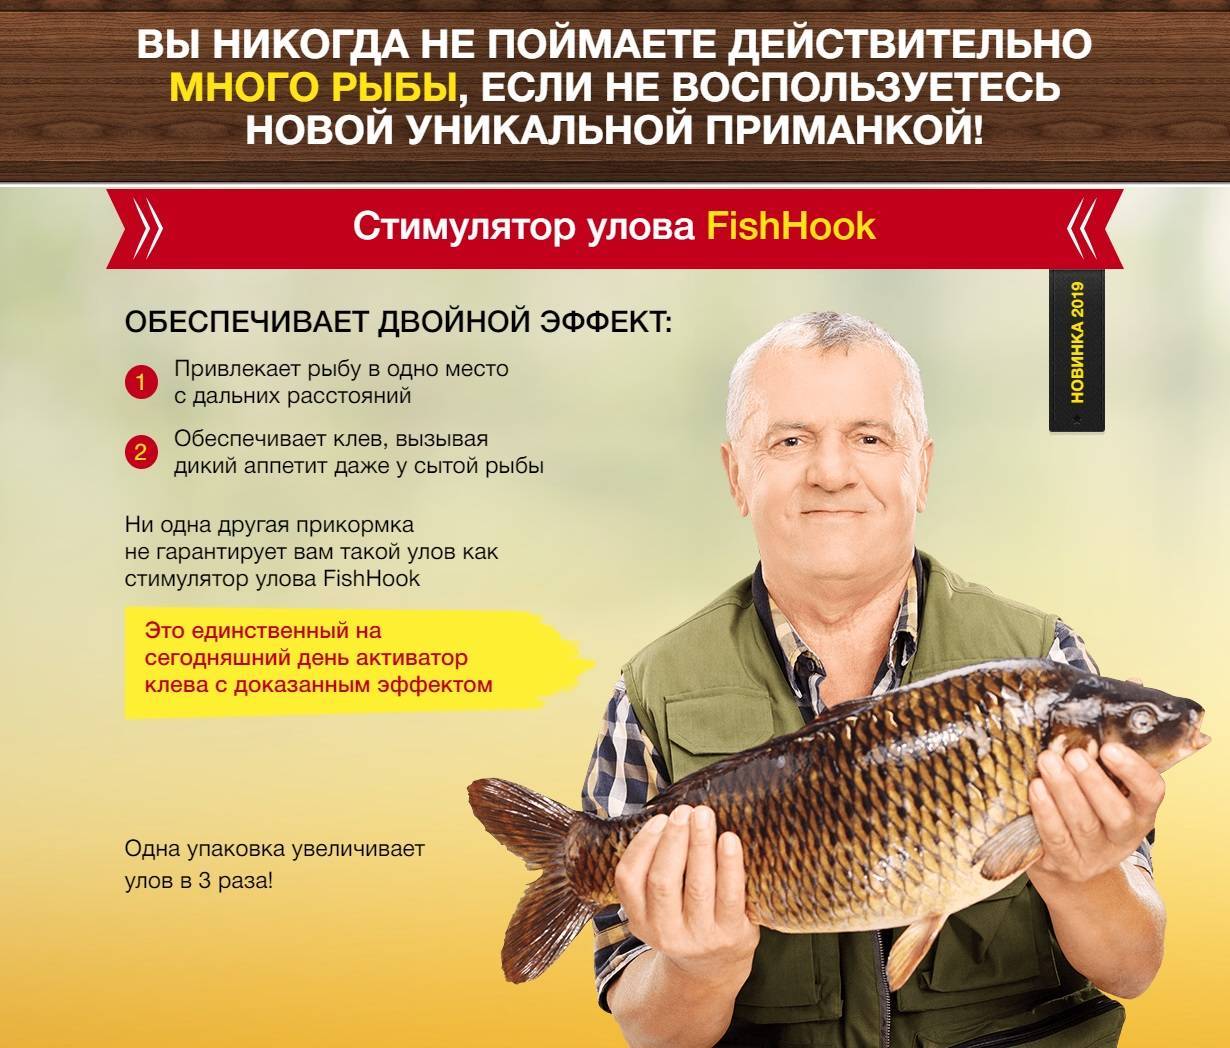 Активатор клева fish hungry: ловись, рыбка, большая!